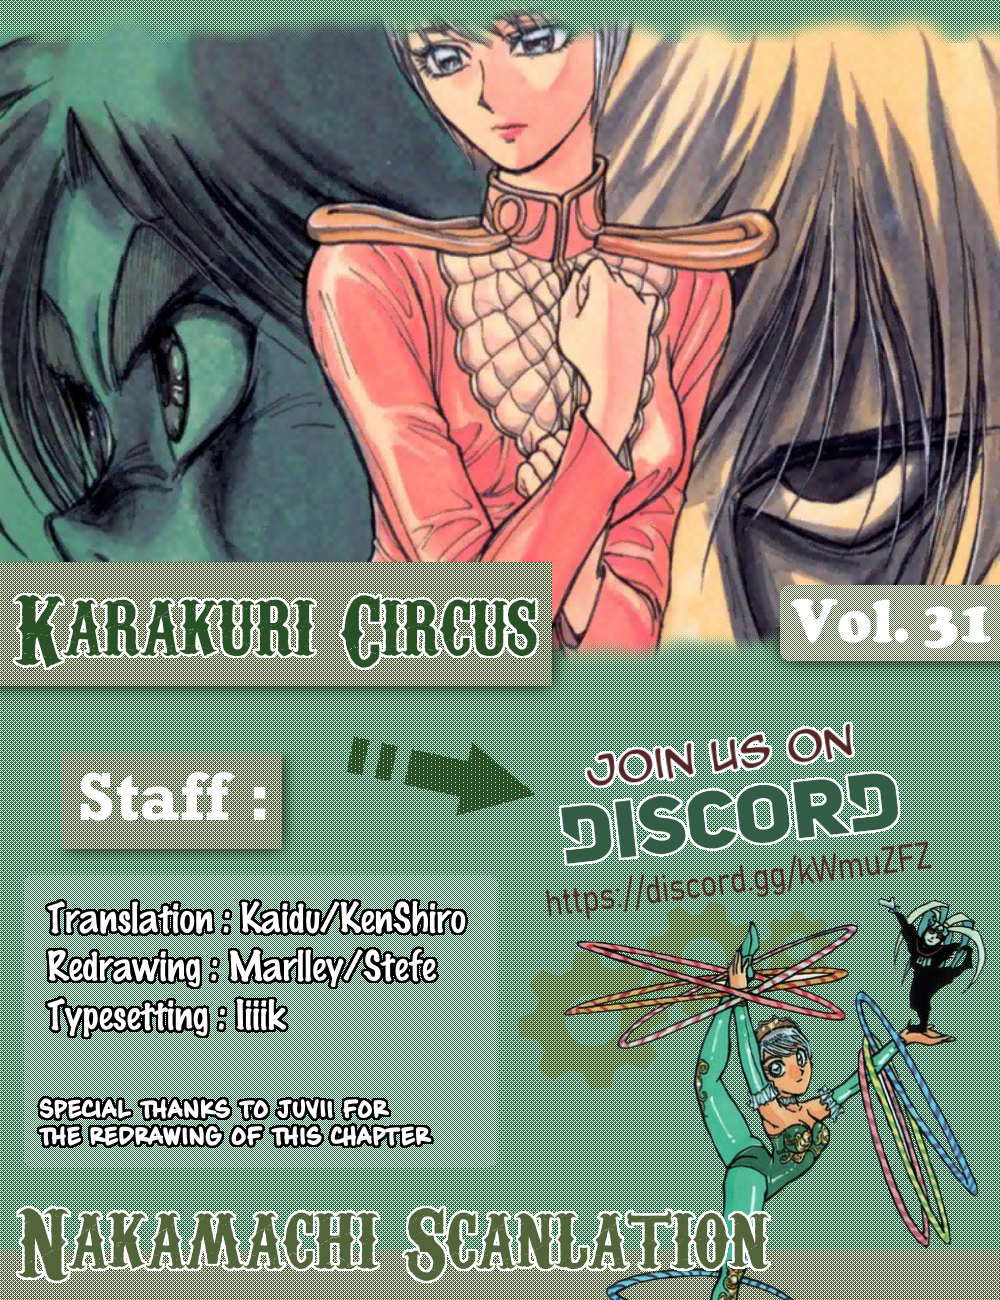 Karakuri Circus Chapter 305: Main Part - Days With Narumi - Act 5: Narumi's Void I - Picture 1